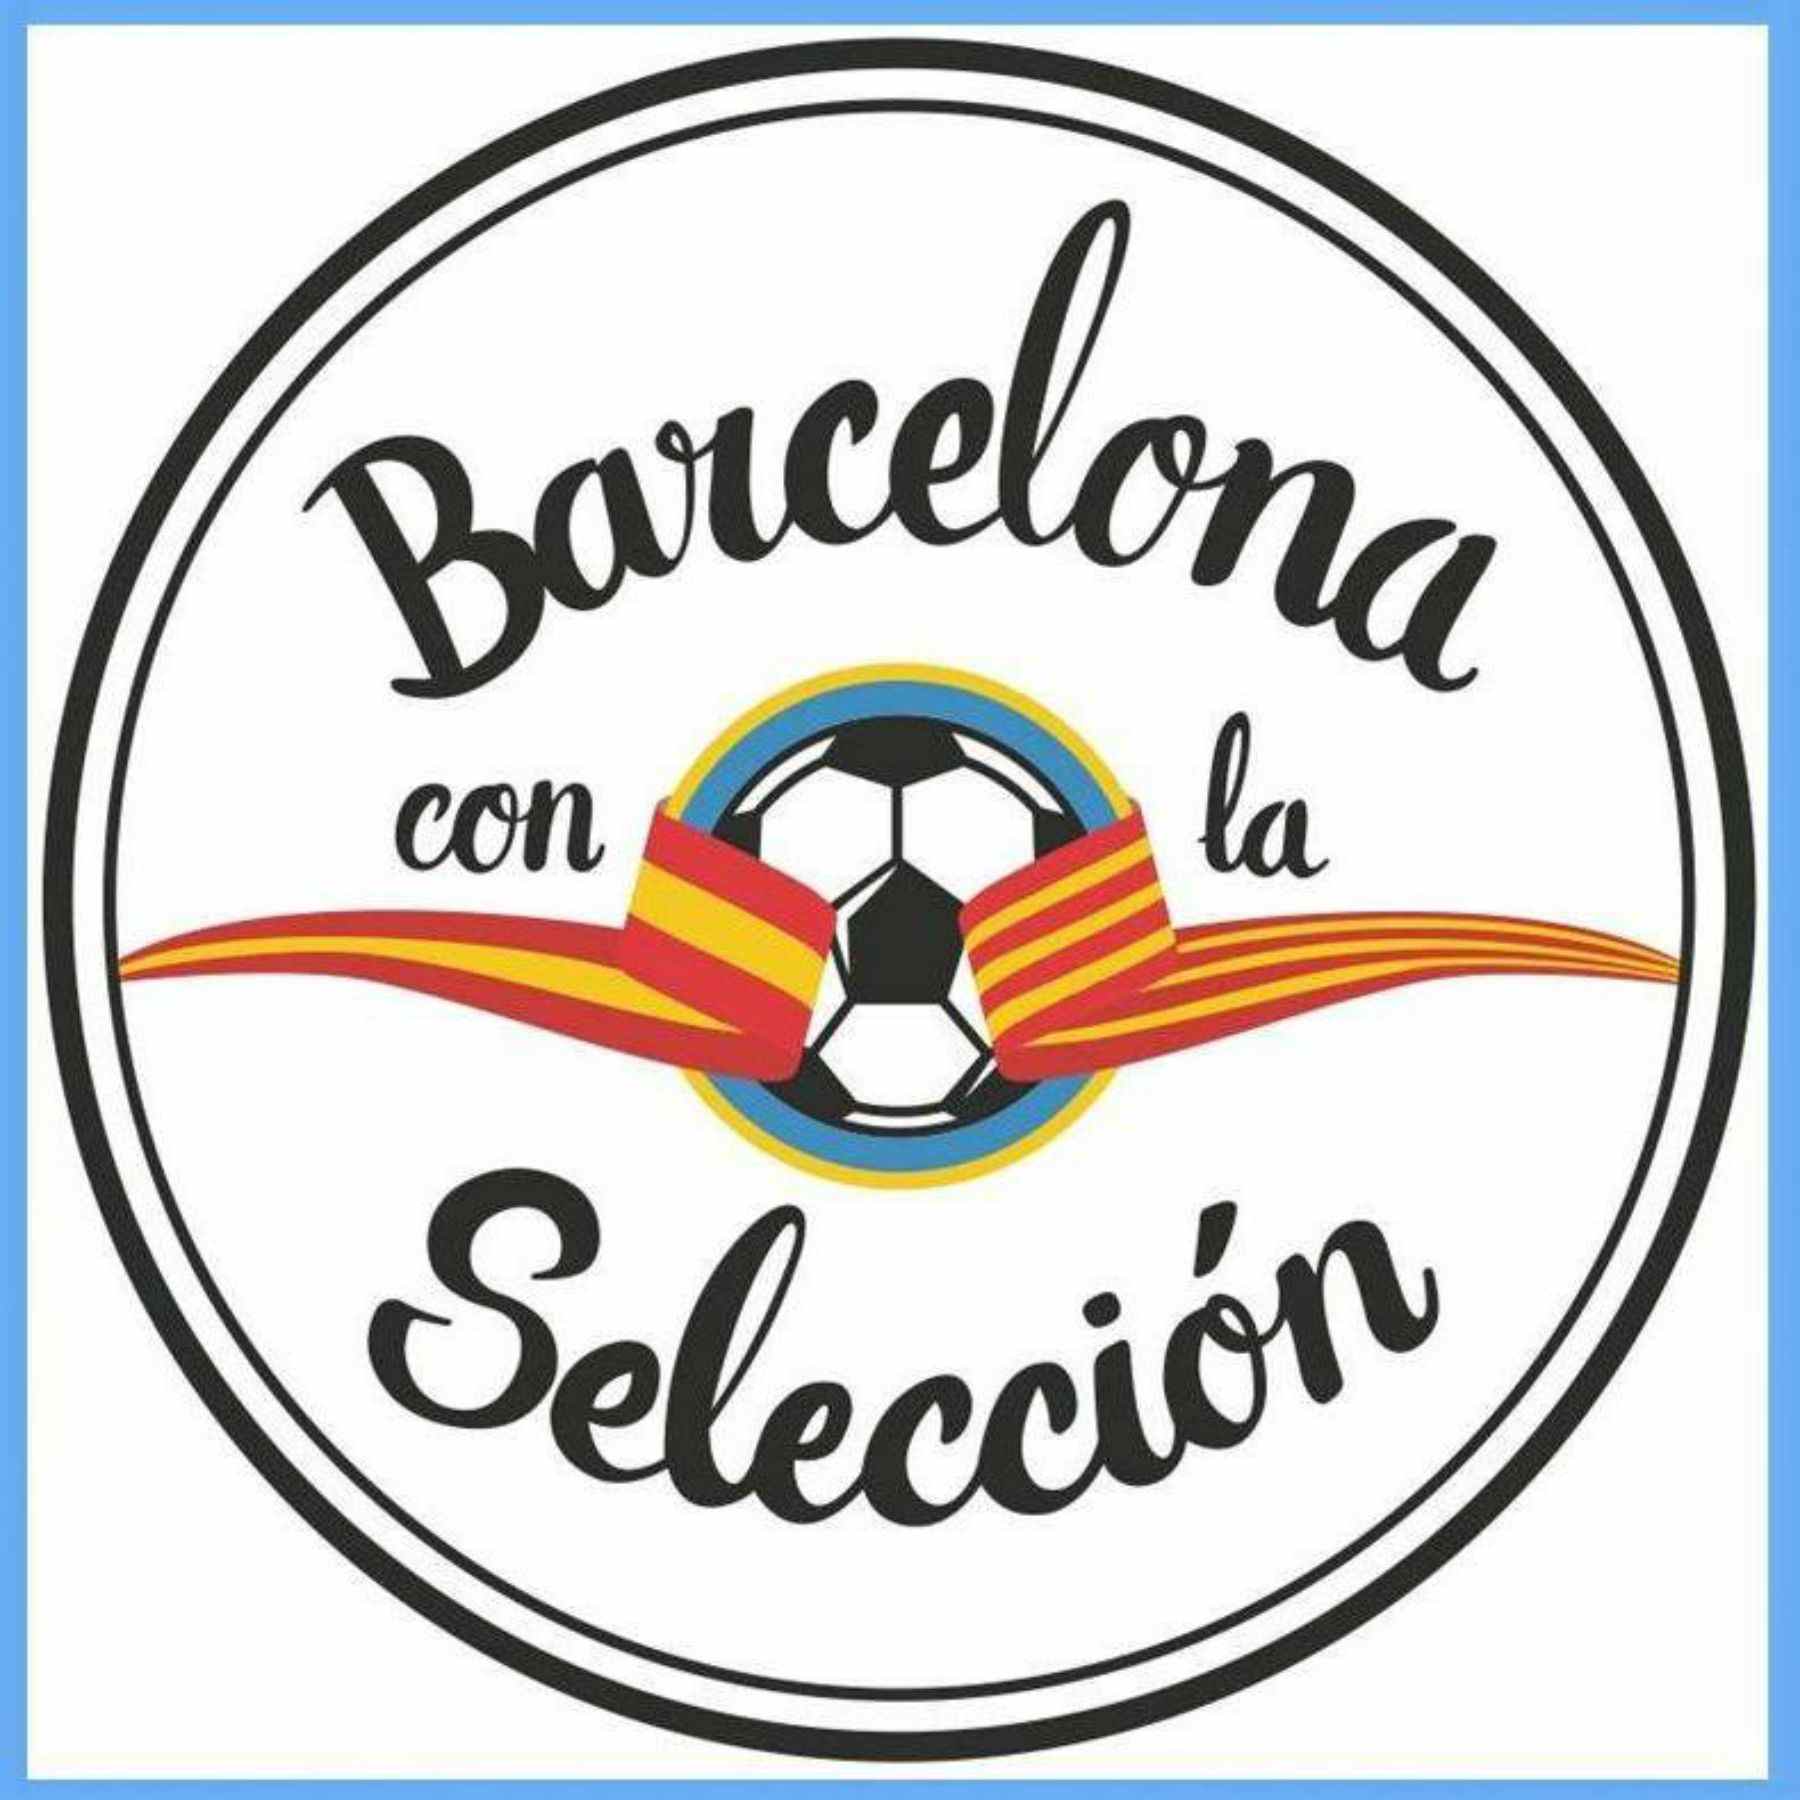 Colau vuelve a multar a 'Barcelona con la Selección'